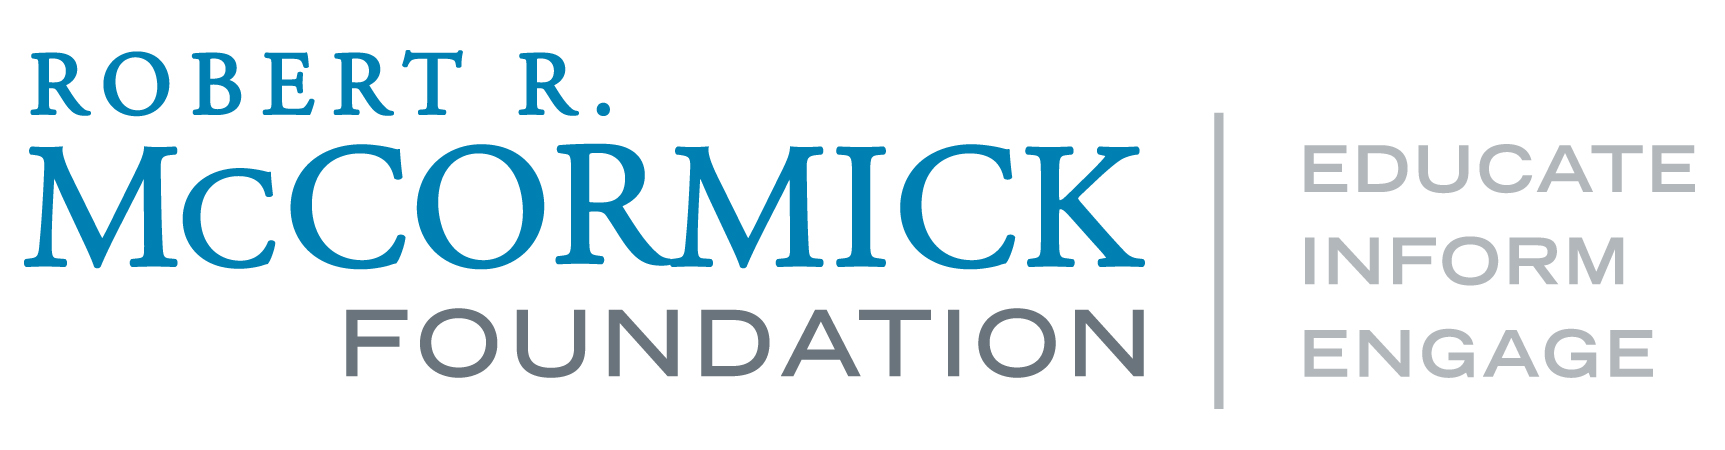 Robert R. McCormick Foundation Education Inform Engage color logo